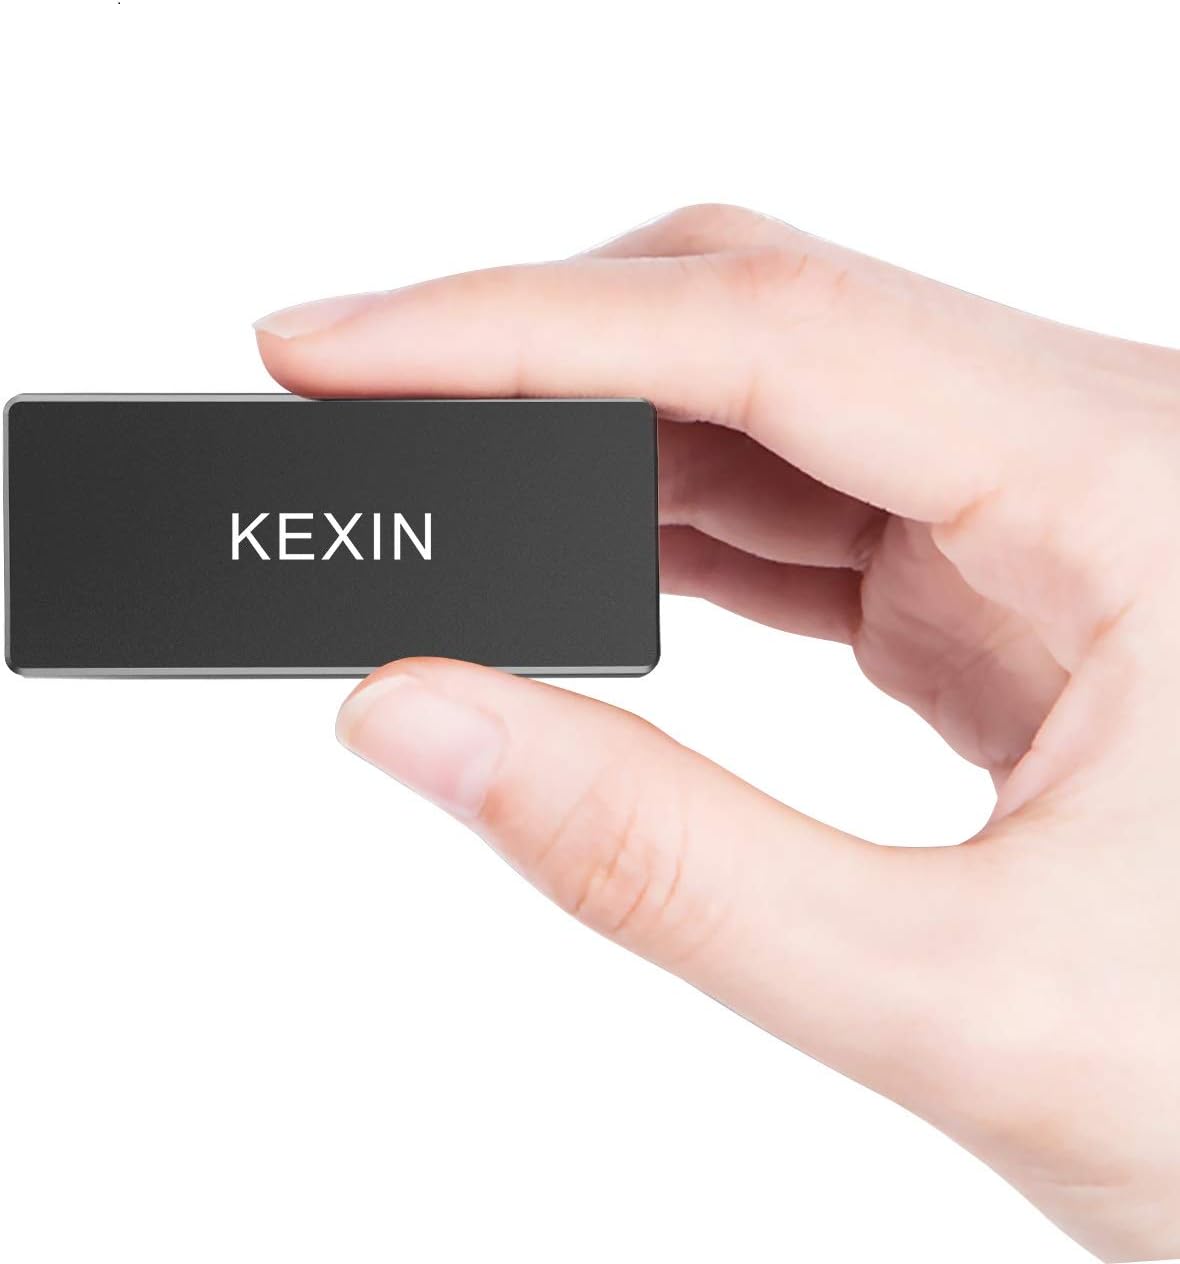 KEXIN ポータブルSSD 250GB USB3.1 Gen2 外付SSD ミニSSD Type-Cに対応 PS4、Windows、MAC、Android、Linuxに適用 超小型高速伝送 耐衝撃 黒